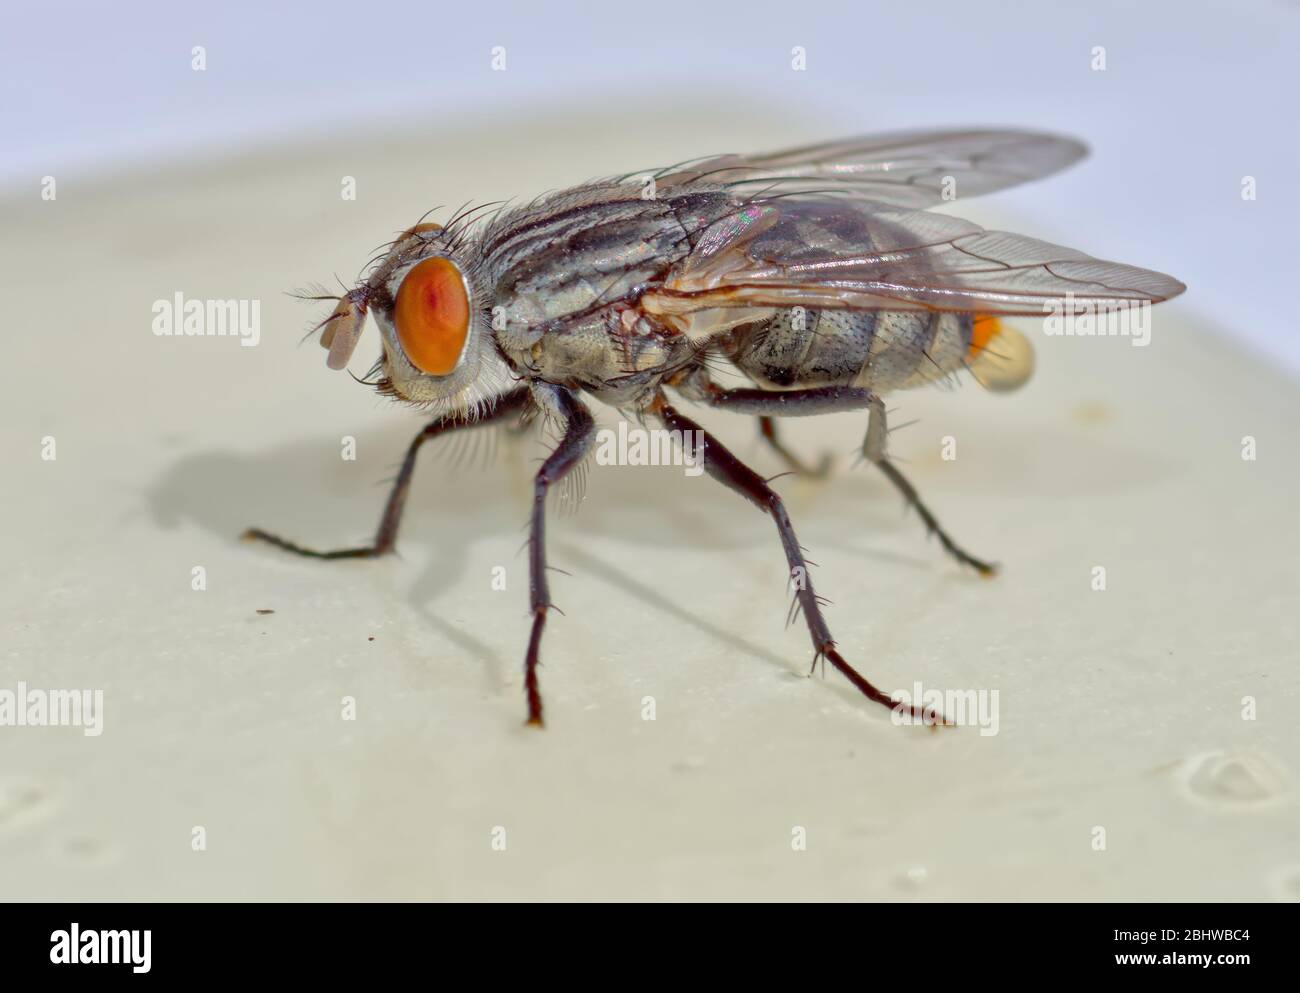 https://c8.alamy.com/comp/2BHWBC4/macro-photo-of-a-common-house-fly-caught-on-flypaper-2BHWBC4.jpg